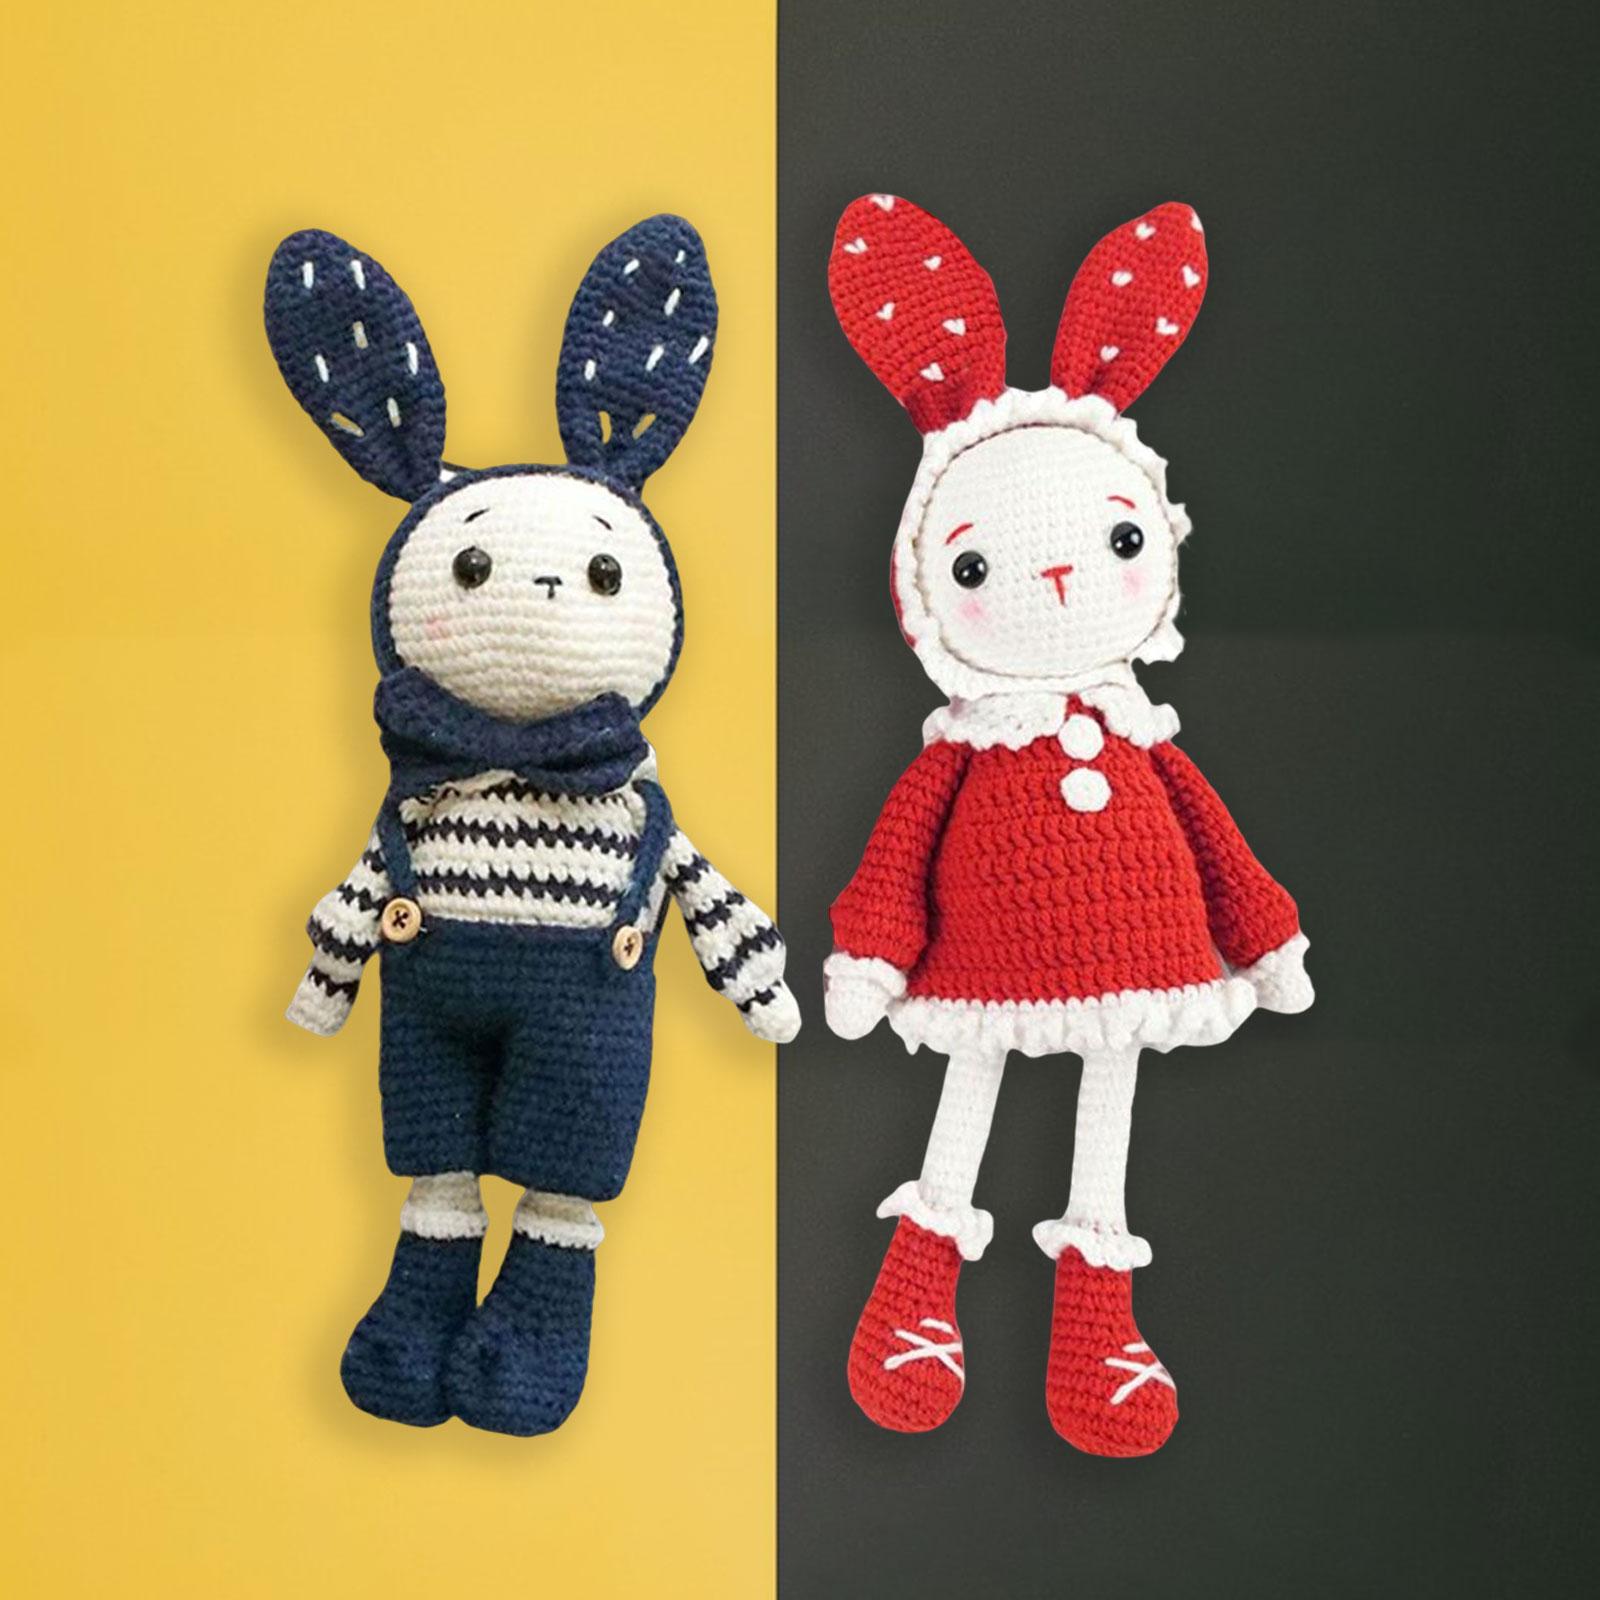 Handmade Crochet Kit for Beginner Cute Rabbits All in Learn to Crochet Navy Blue and Red